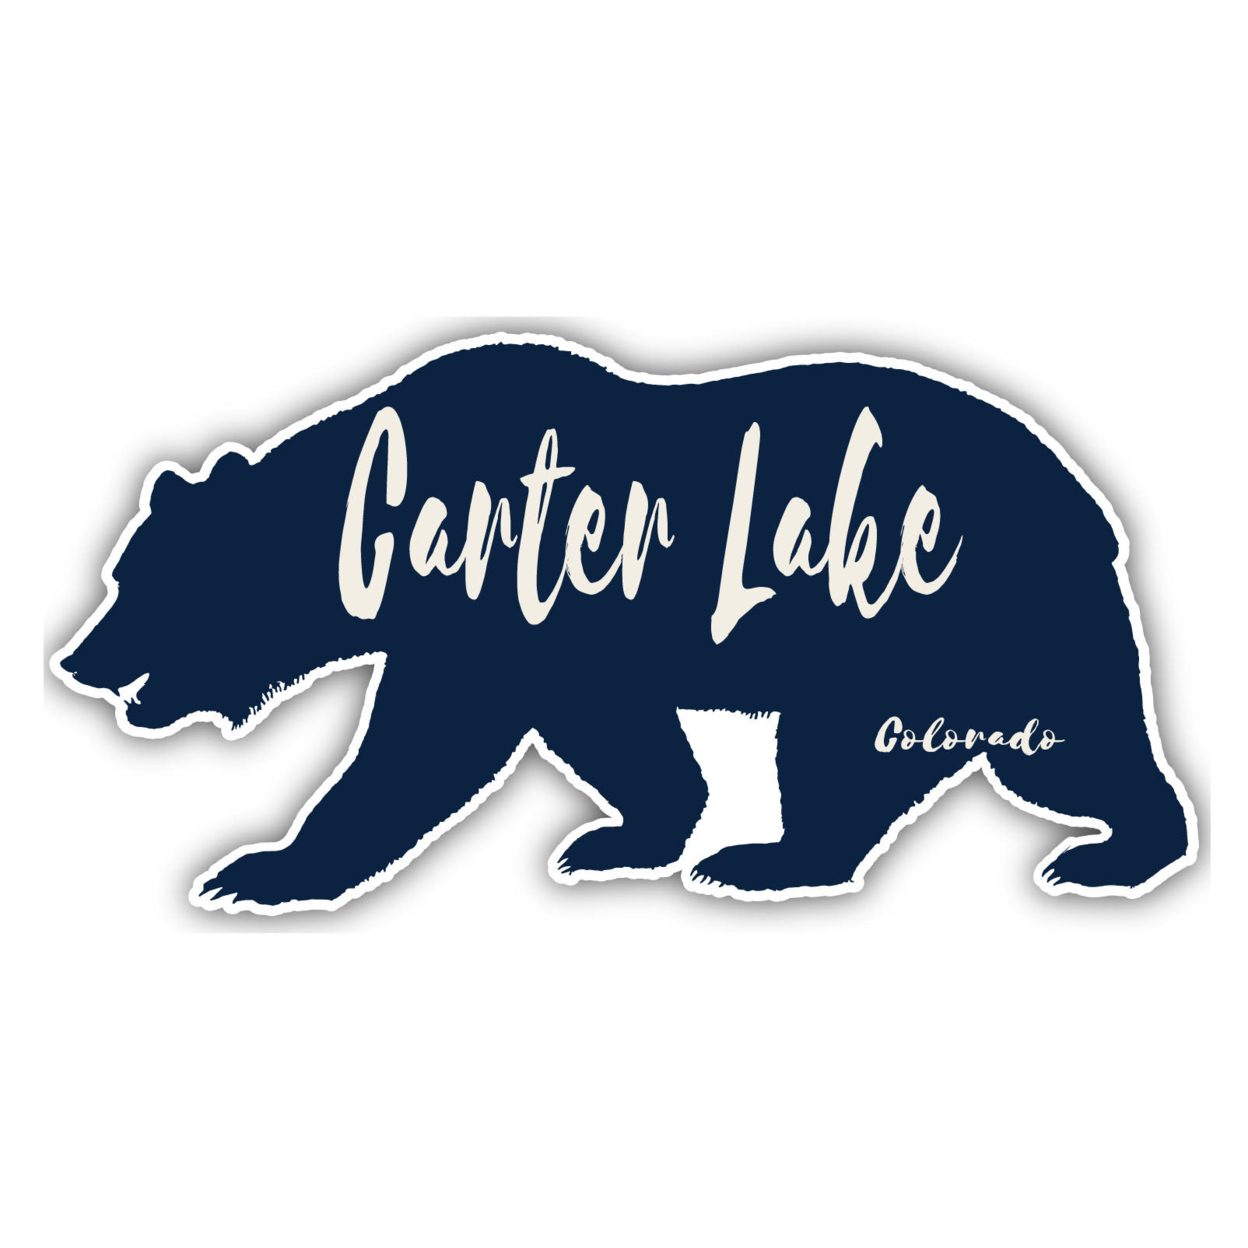 Carter Lake Colorado Souvenir Decorative Stickers (Choose Theme And Size) - Single Unit, 2-Inch, Bear